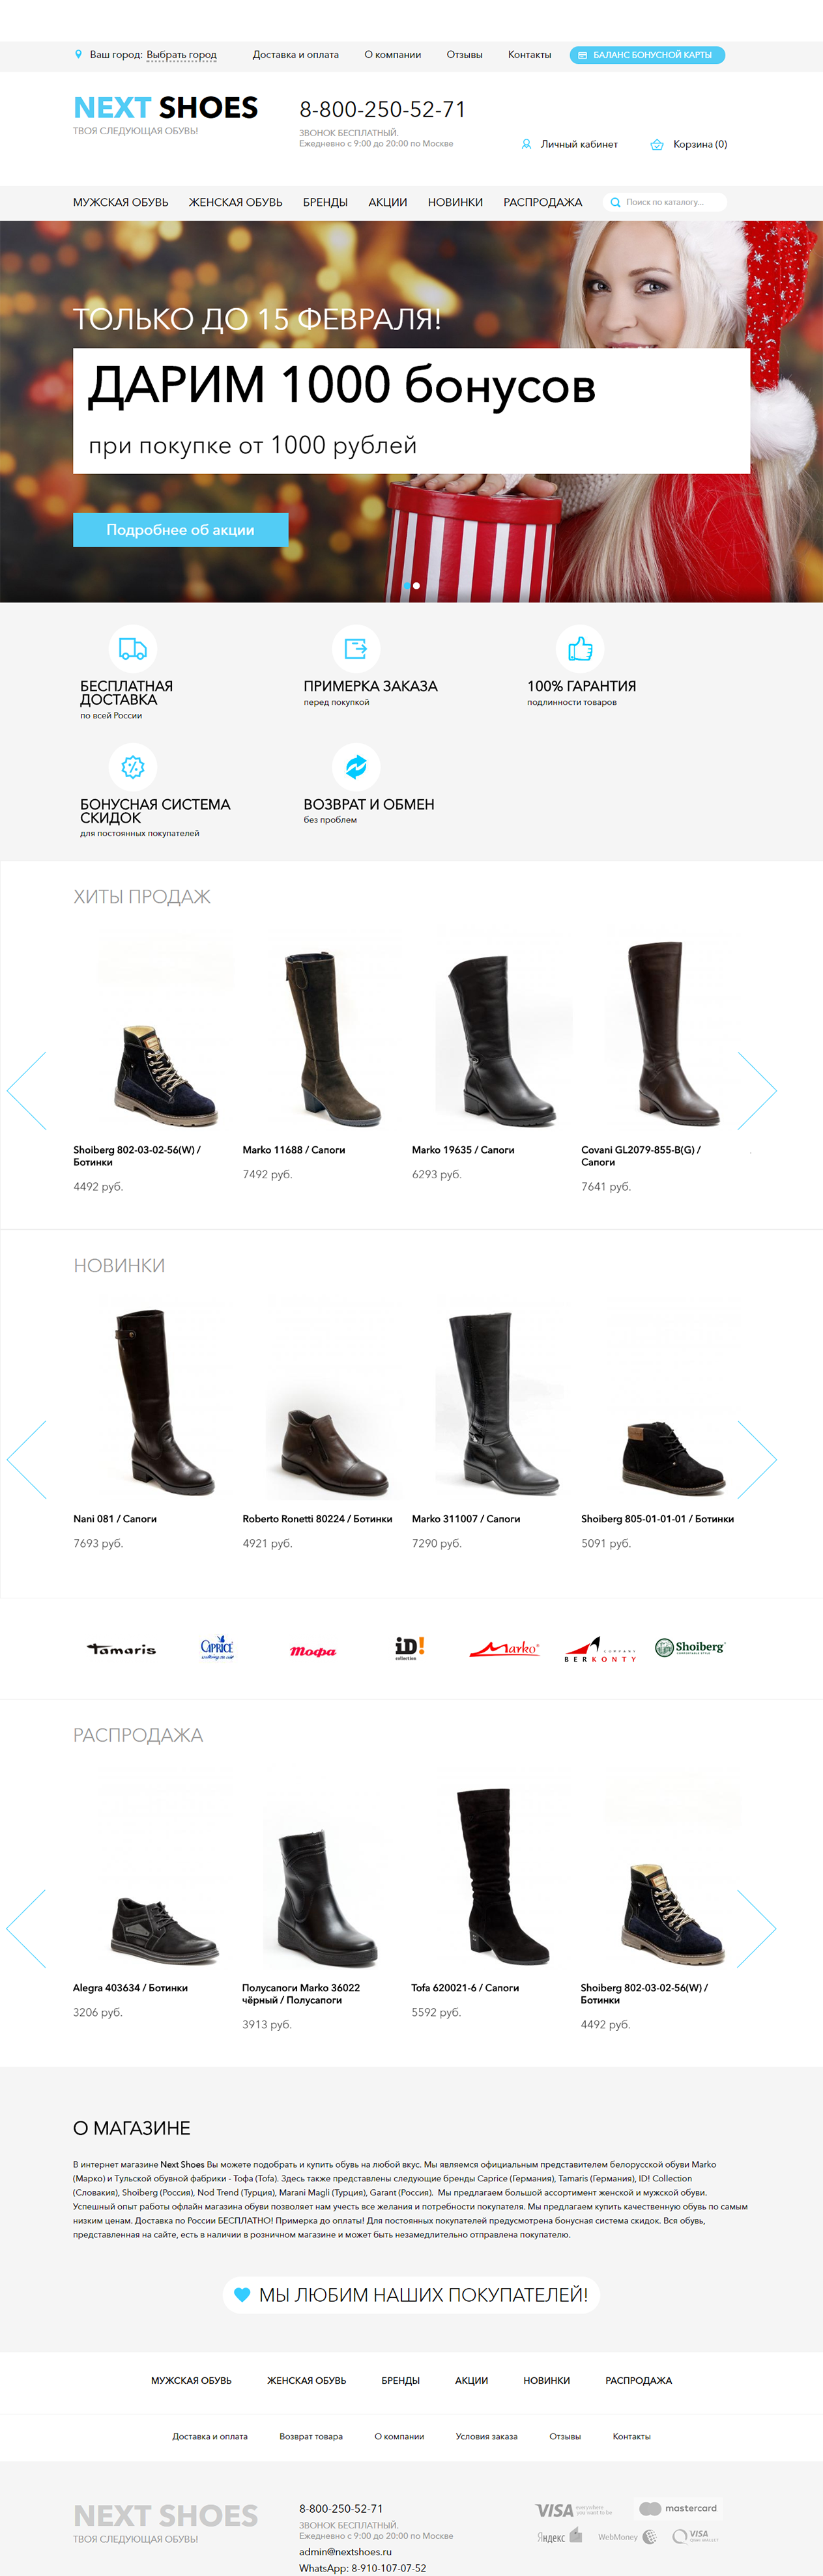 Интернет-магазин обуви «NEXT Shoes»: 